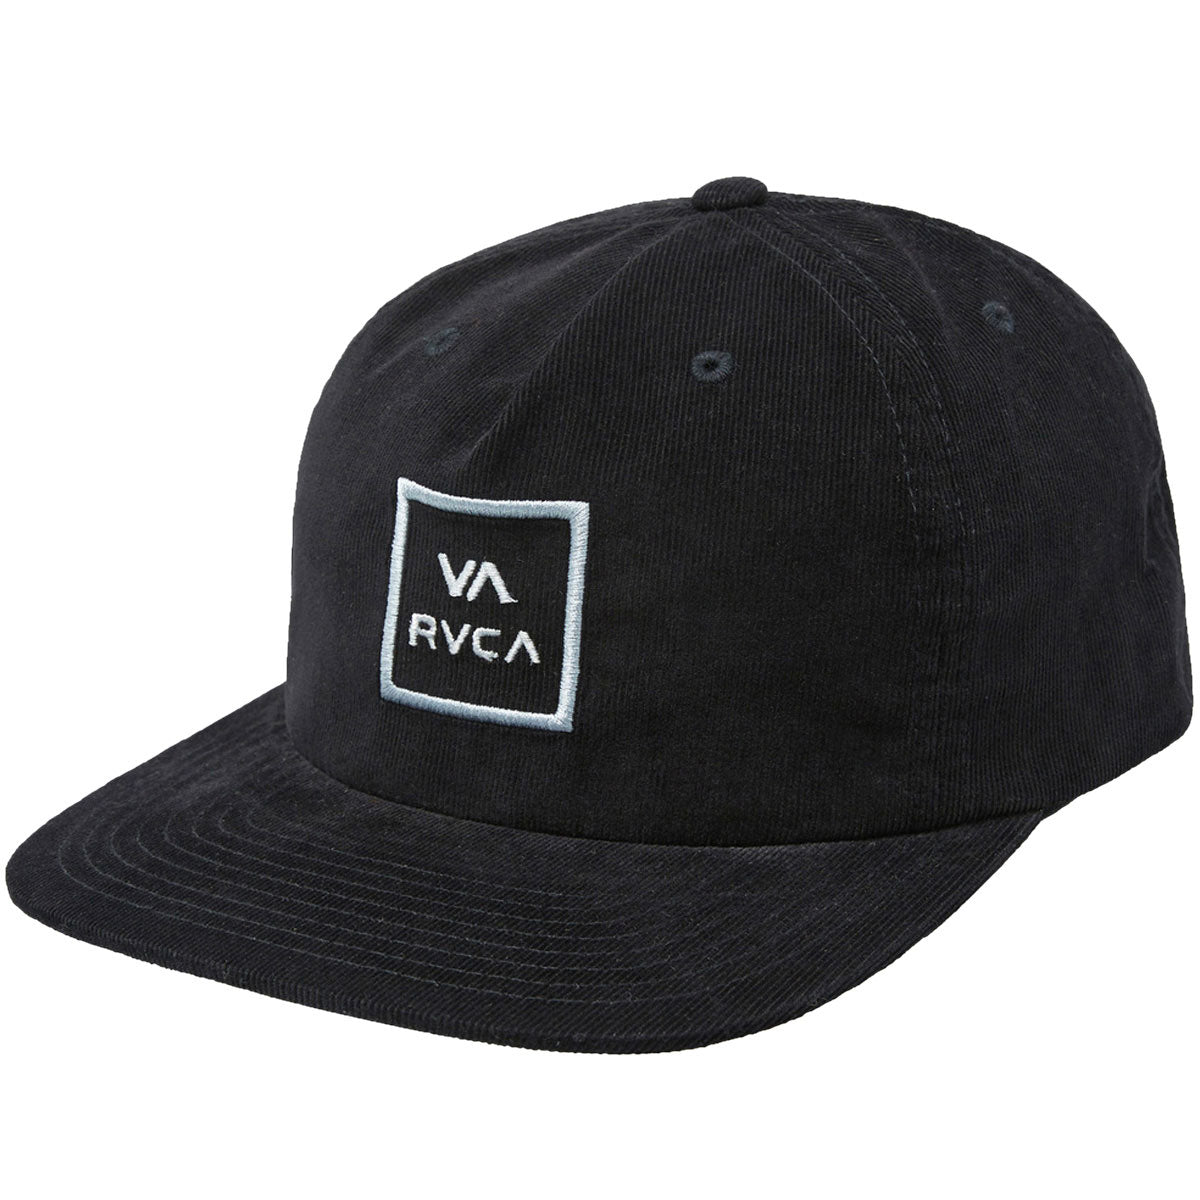 RVCA Freeman Snapback Hat - Black image 1